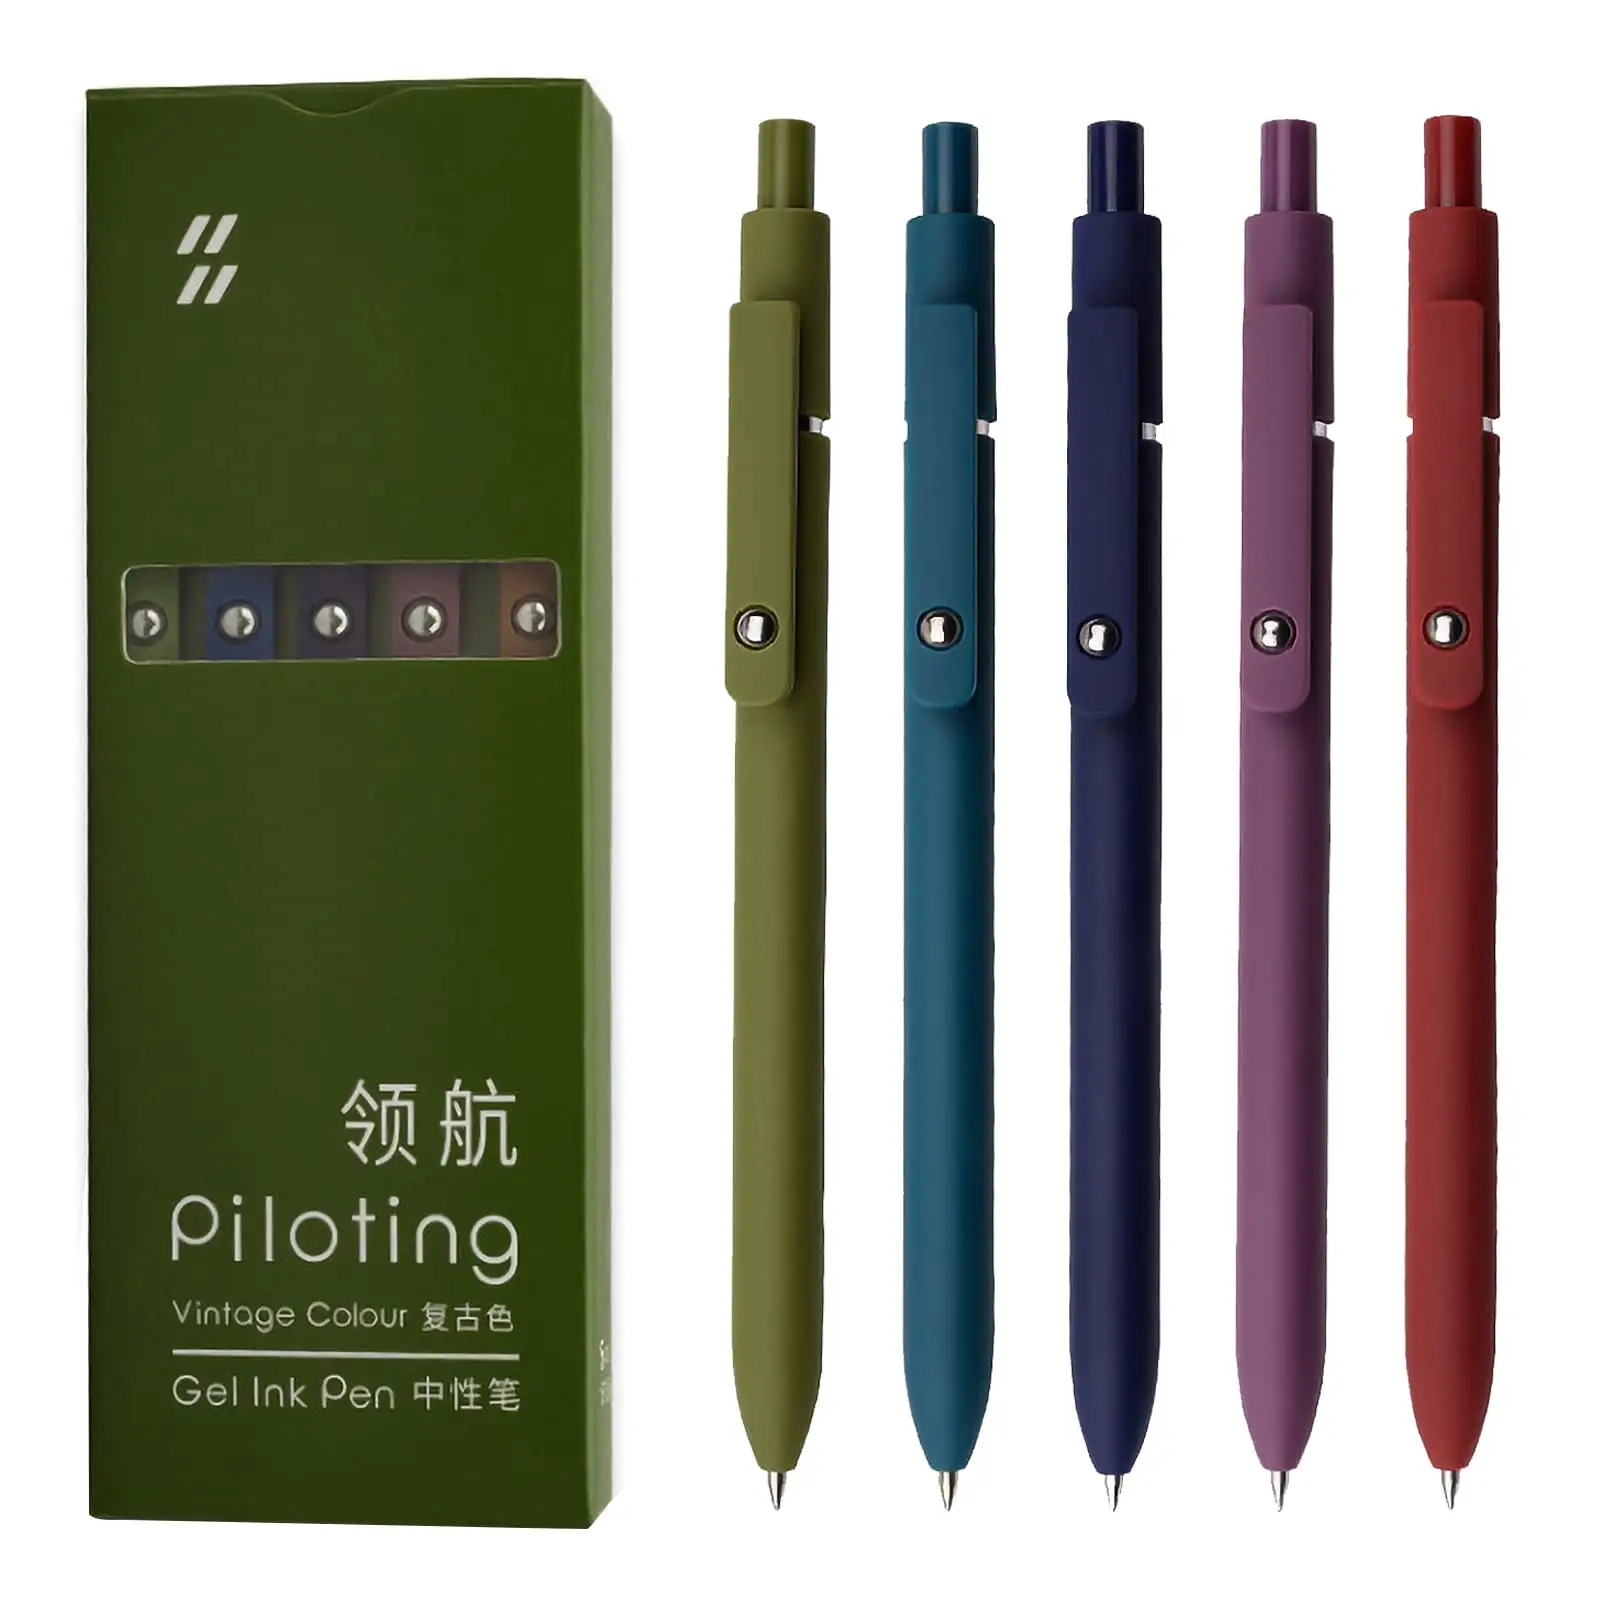 Penne Gel, 5 pz 0.5mm giapponese penne a inchiostro nero a punto sottile e liscia per scrivere serie di fascia alta per il Journaling di appunti